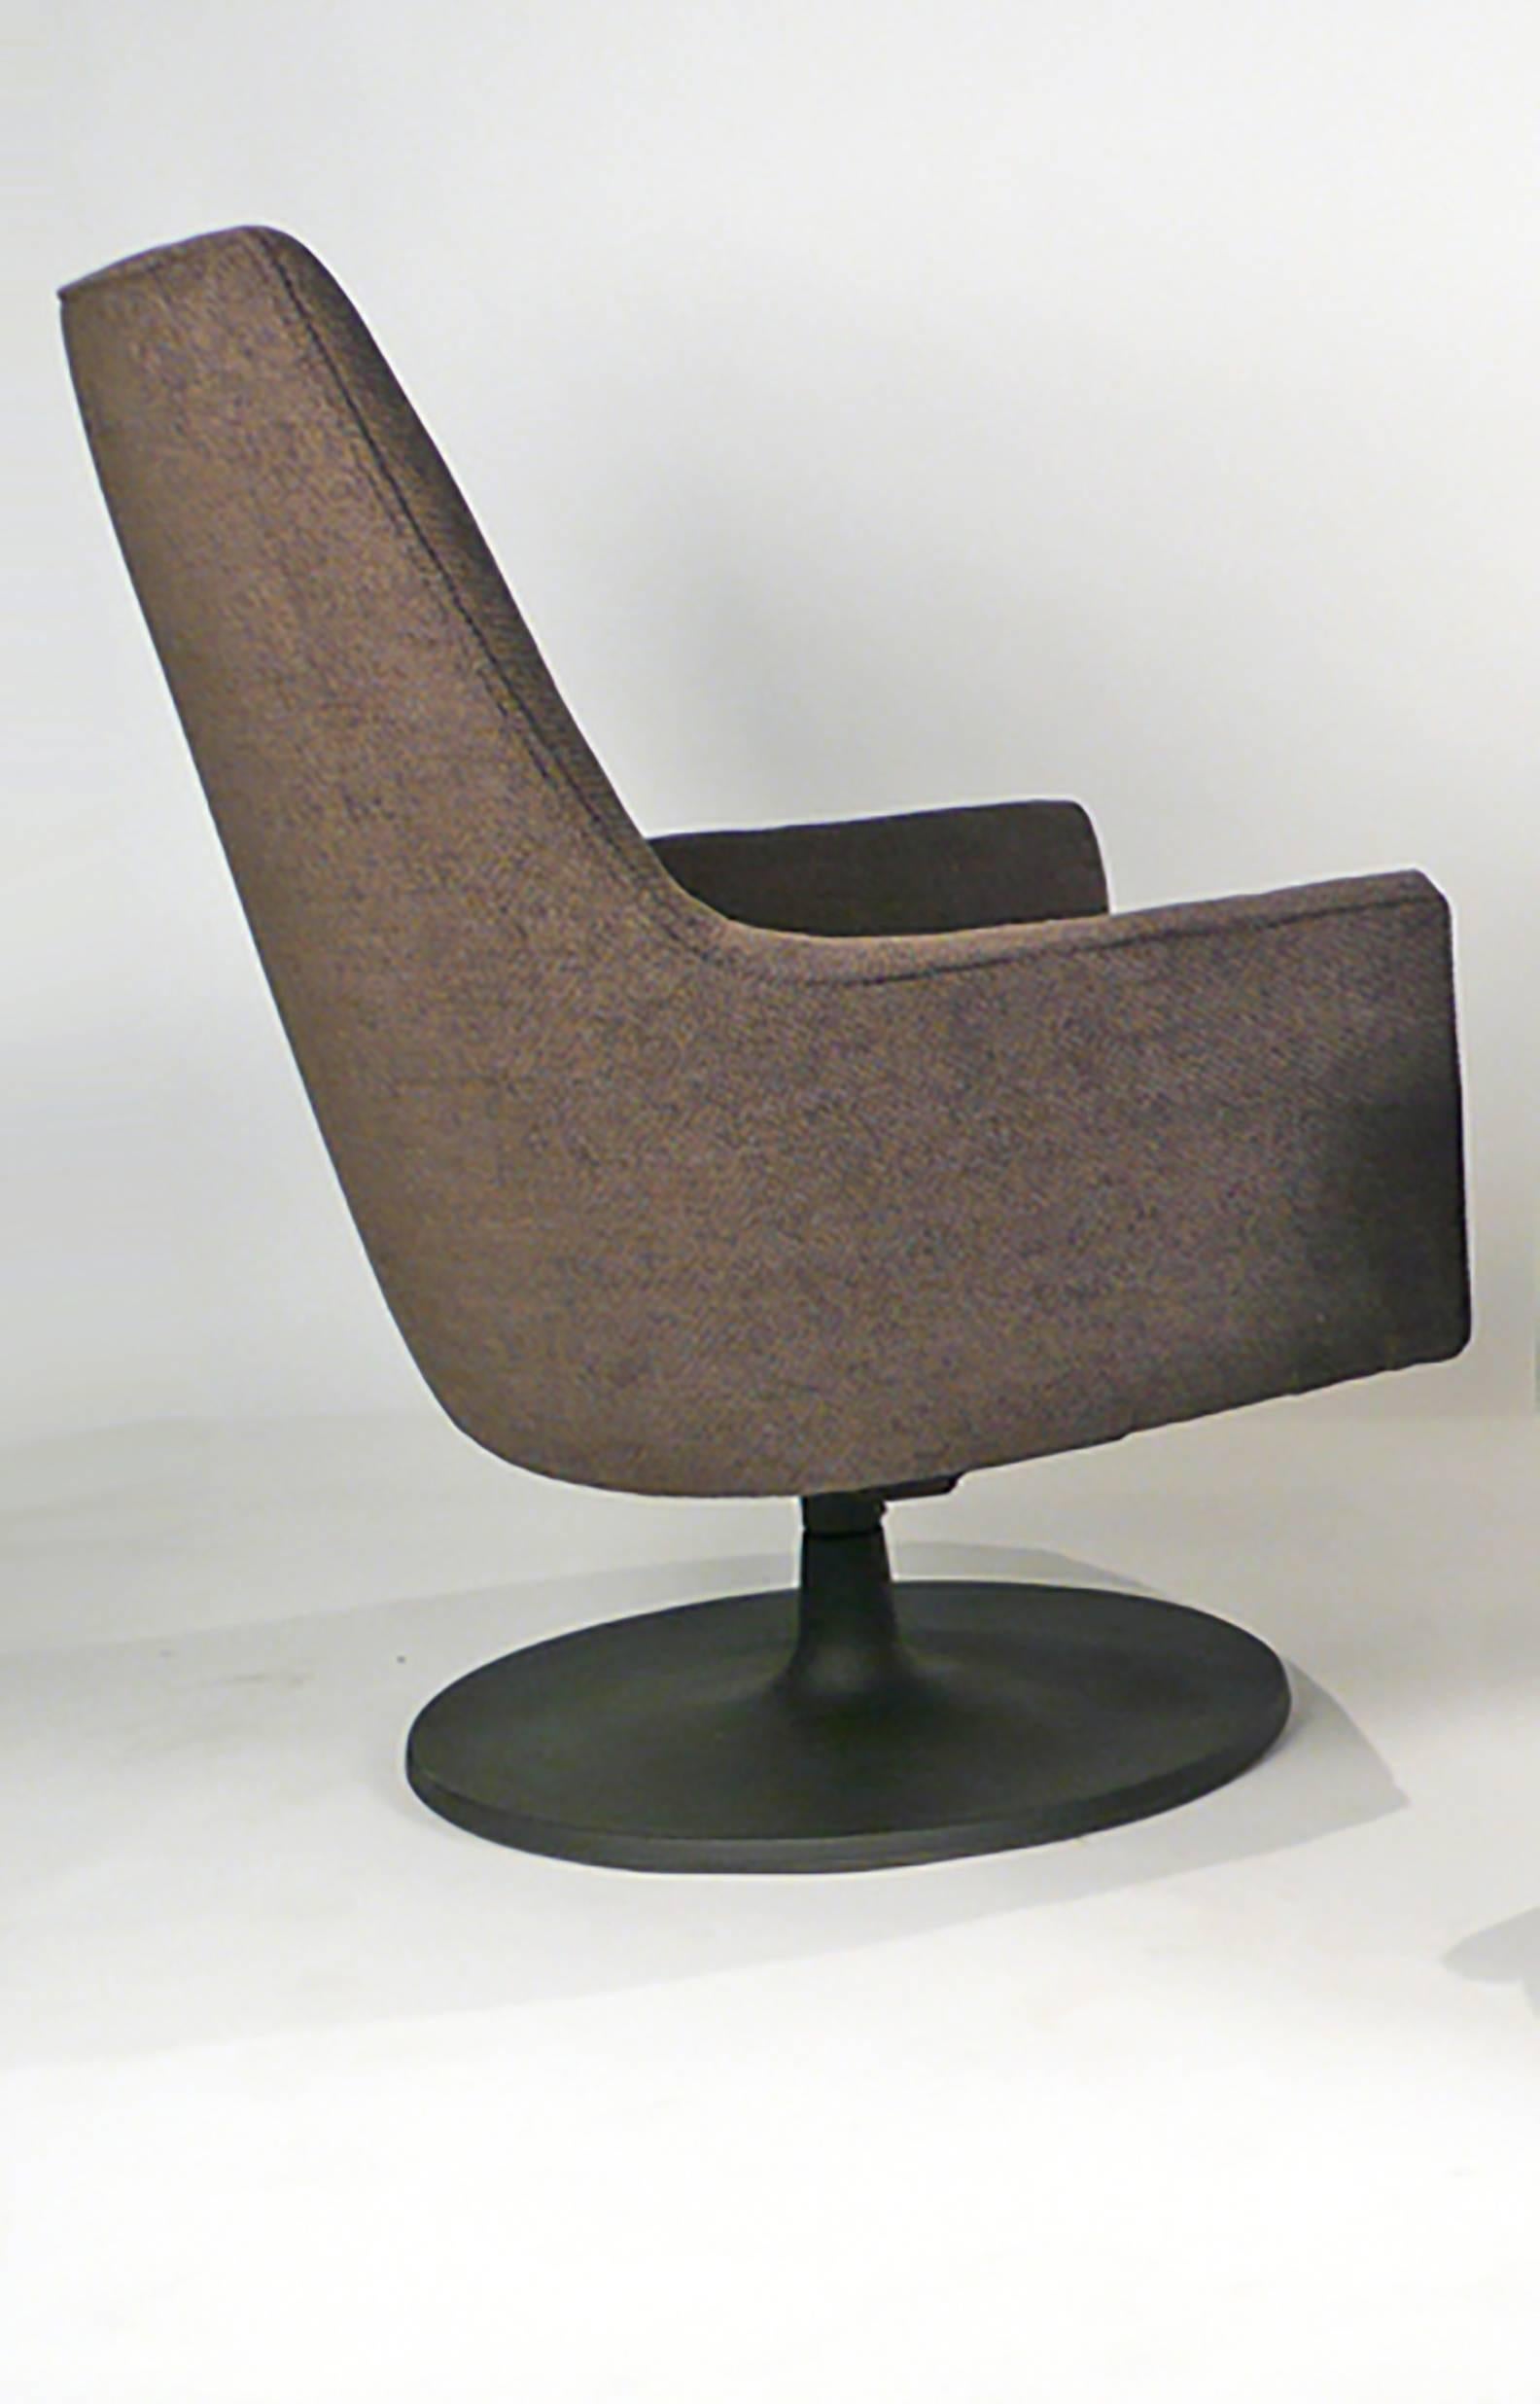 Steel Jens Risom His Lounge Chair